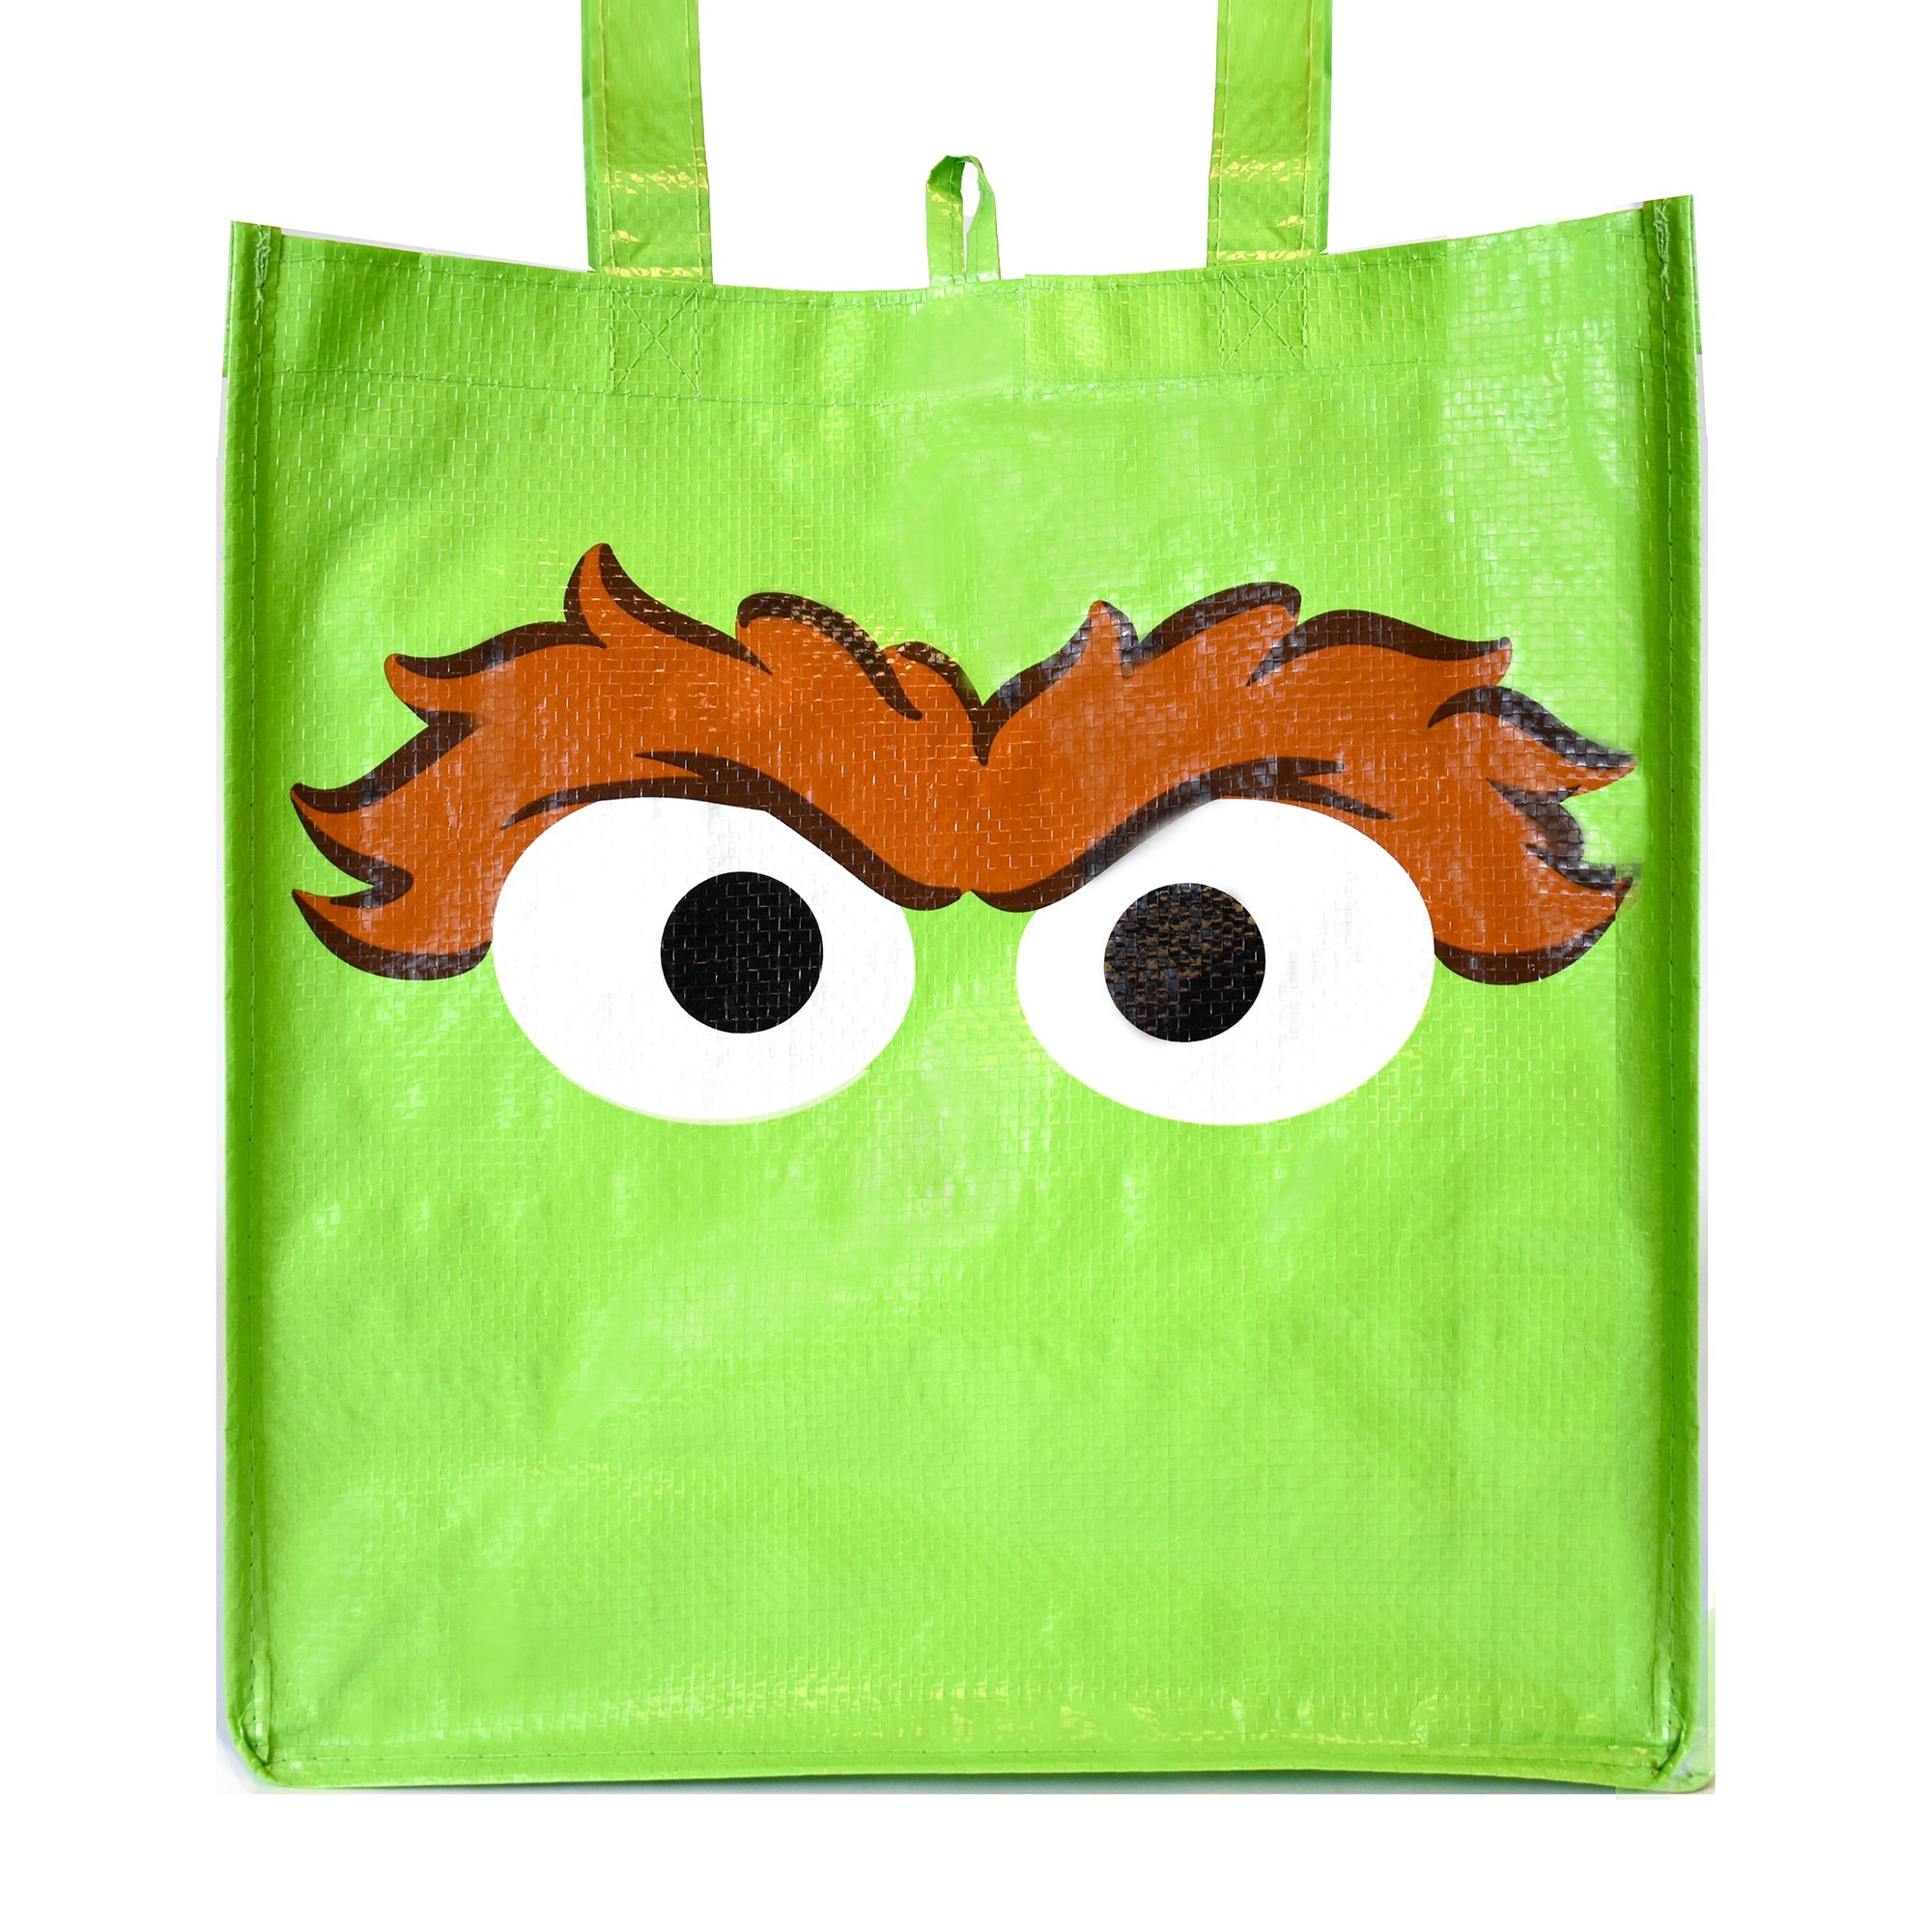 Sesame Street bags (10), Sesame Street Favor Bags, Sesame Street